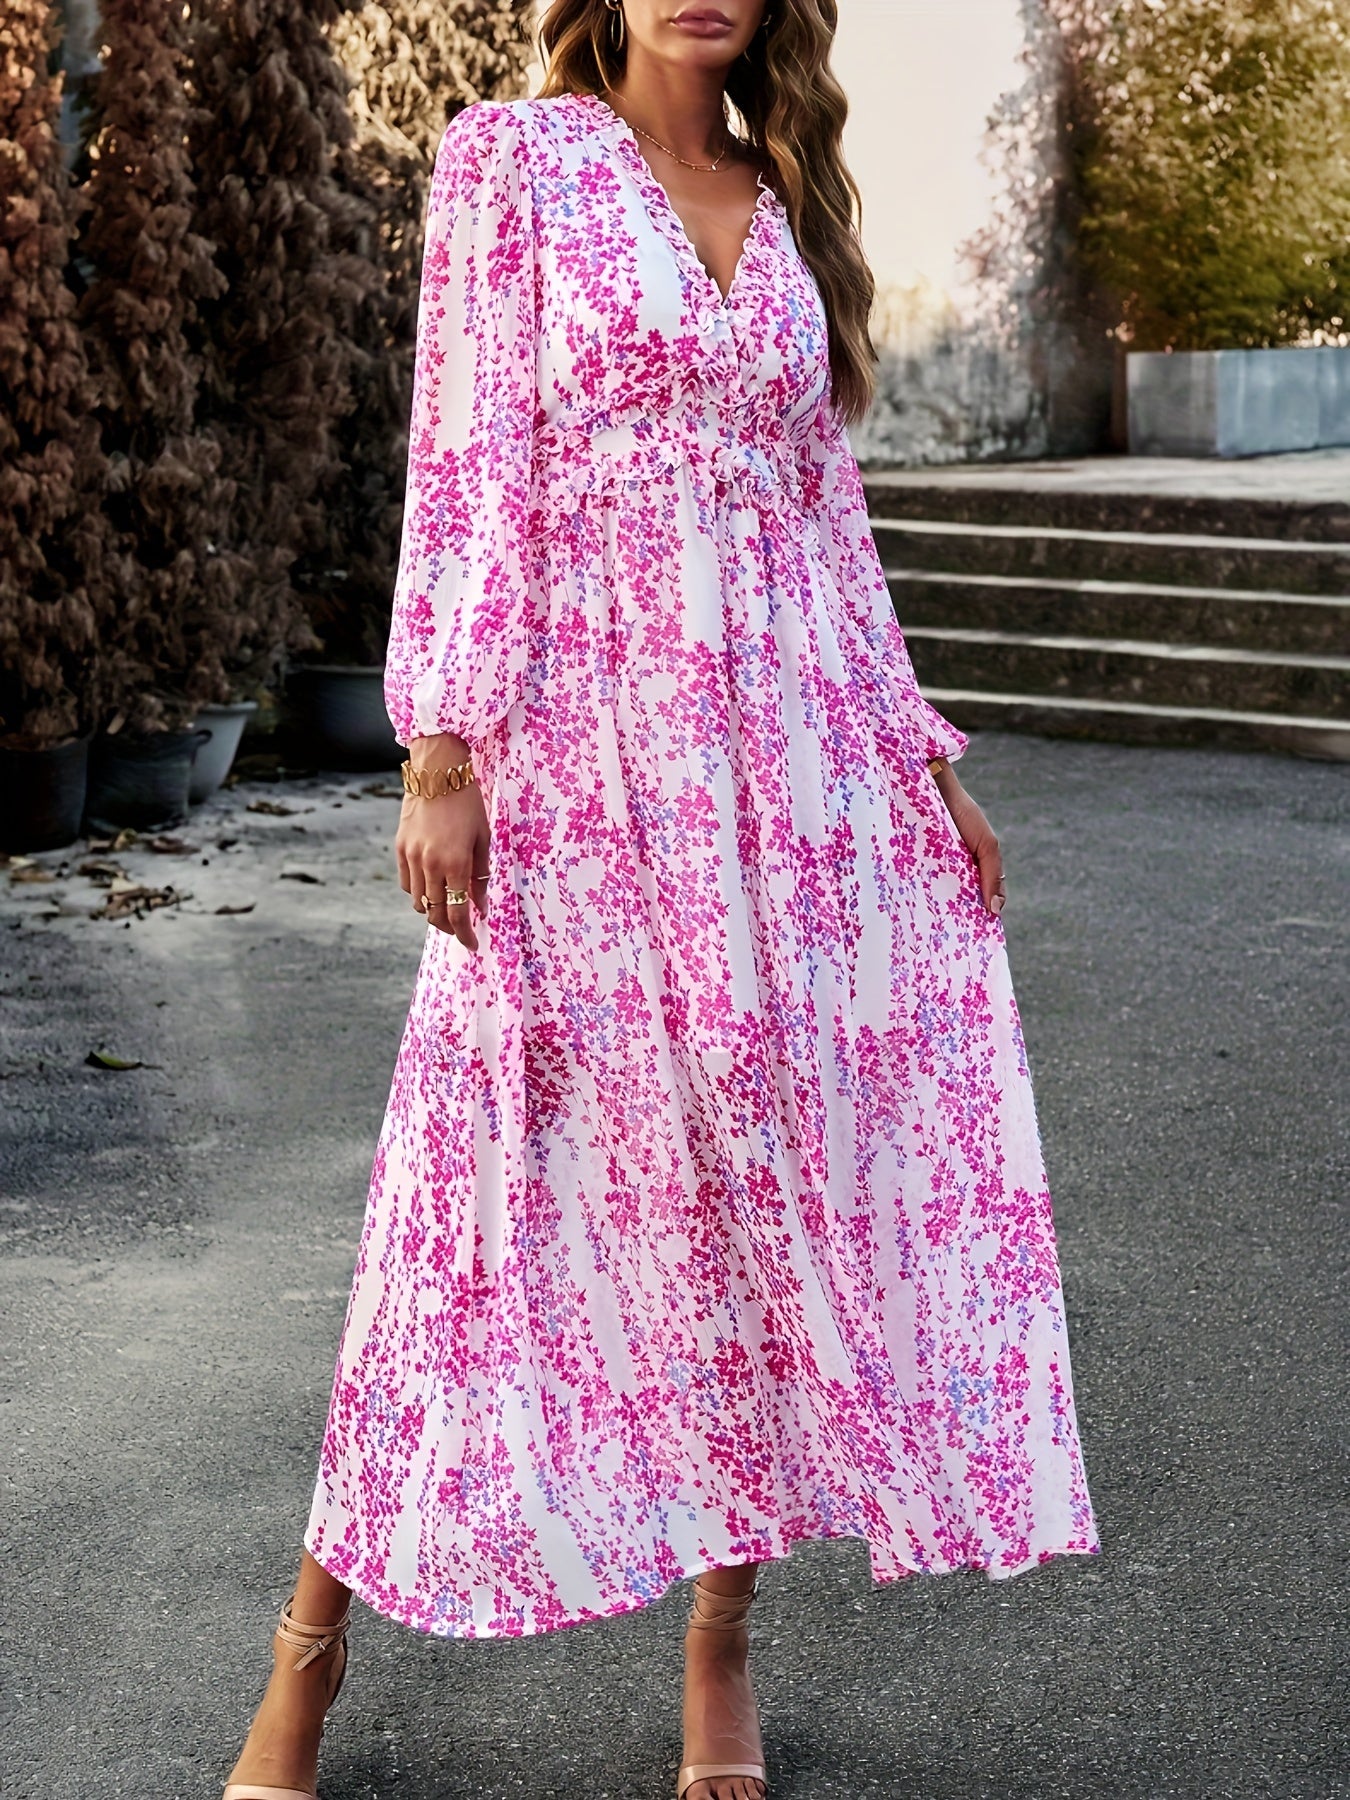 Spring-Fall Floral Midi Dress - Elegant Lantern Sleeves & Feminine Surplice Neckline - Versatile Casual Women’s Wear